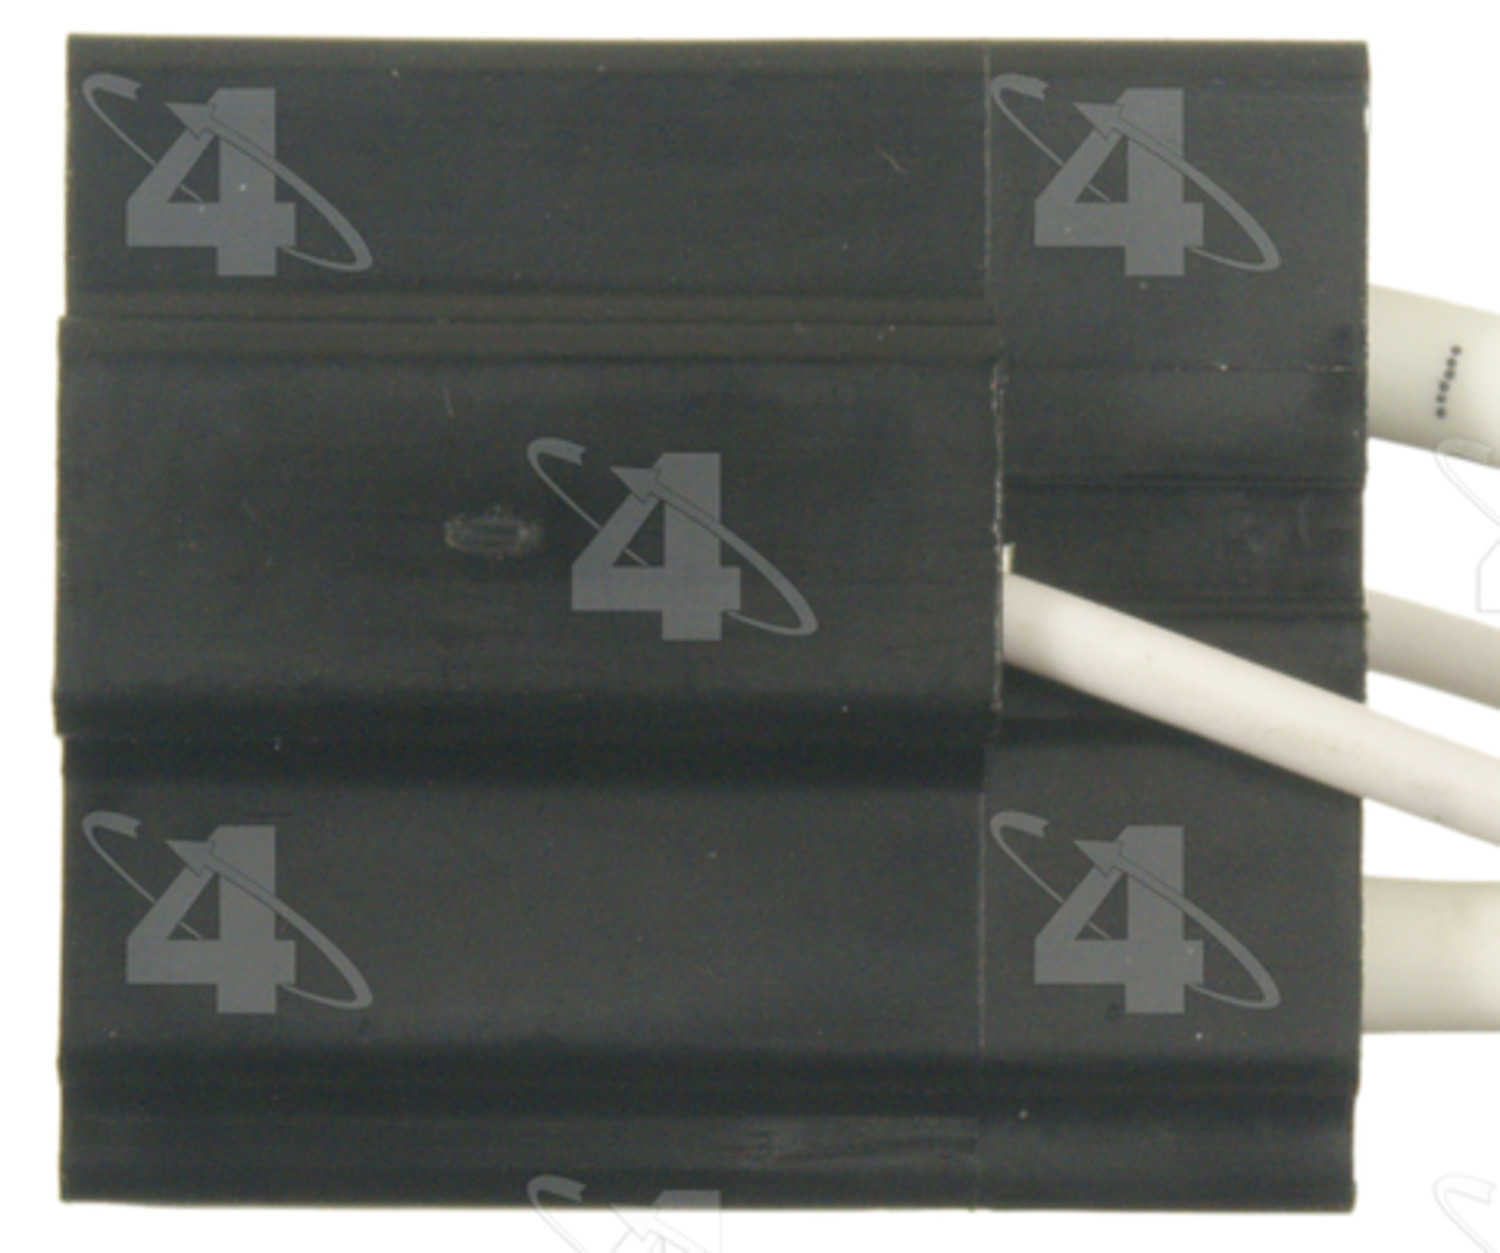 FOUR SEASONS - A/C Clutch Control Relay Harness Connector - FSE 37243